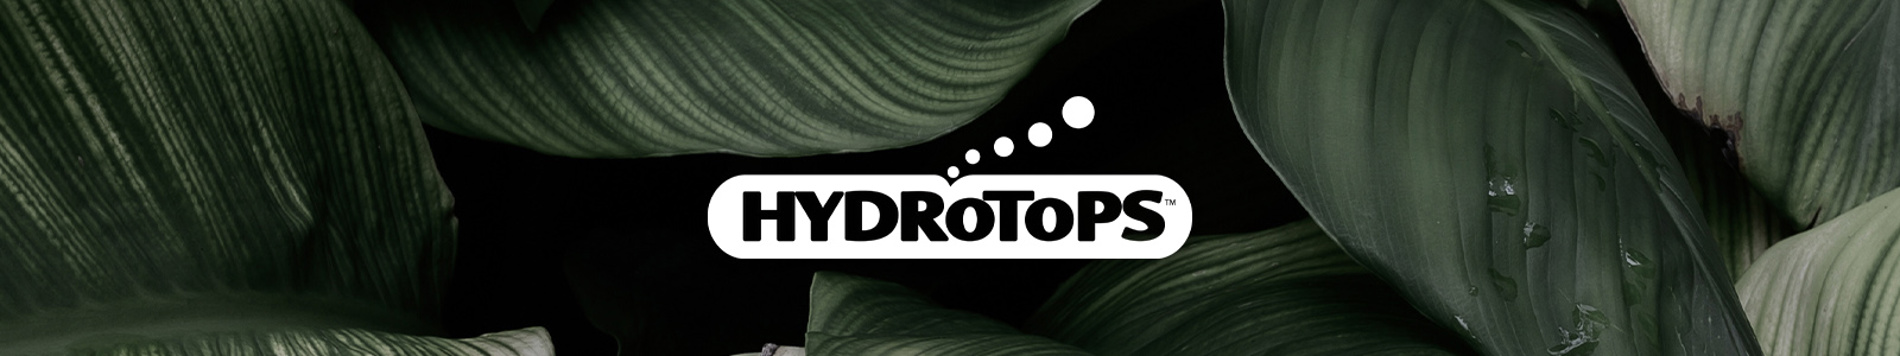 Hydrotops Nutrients